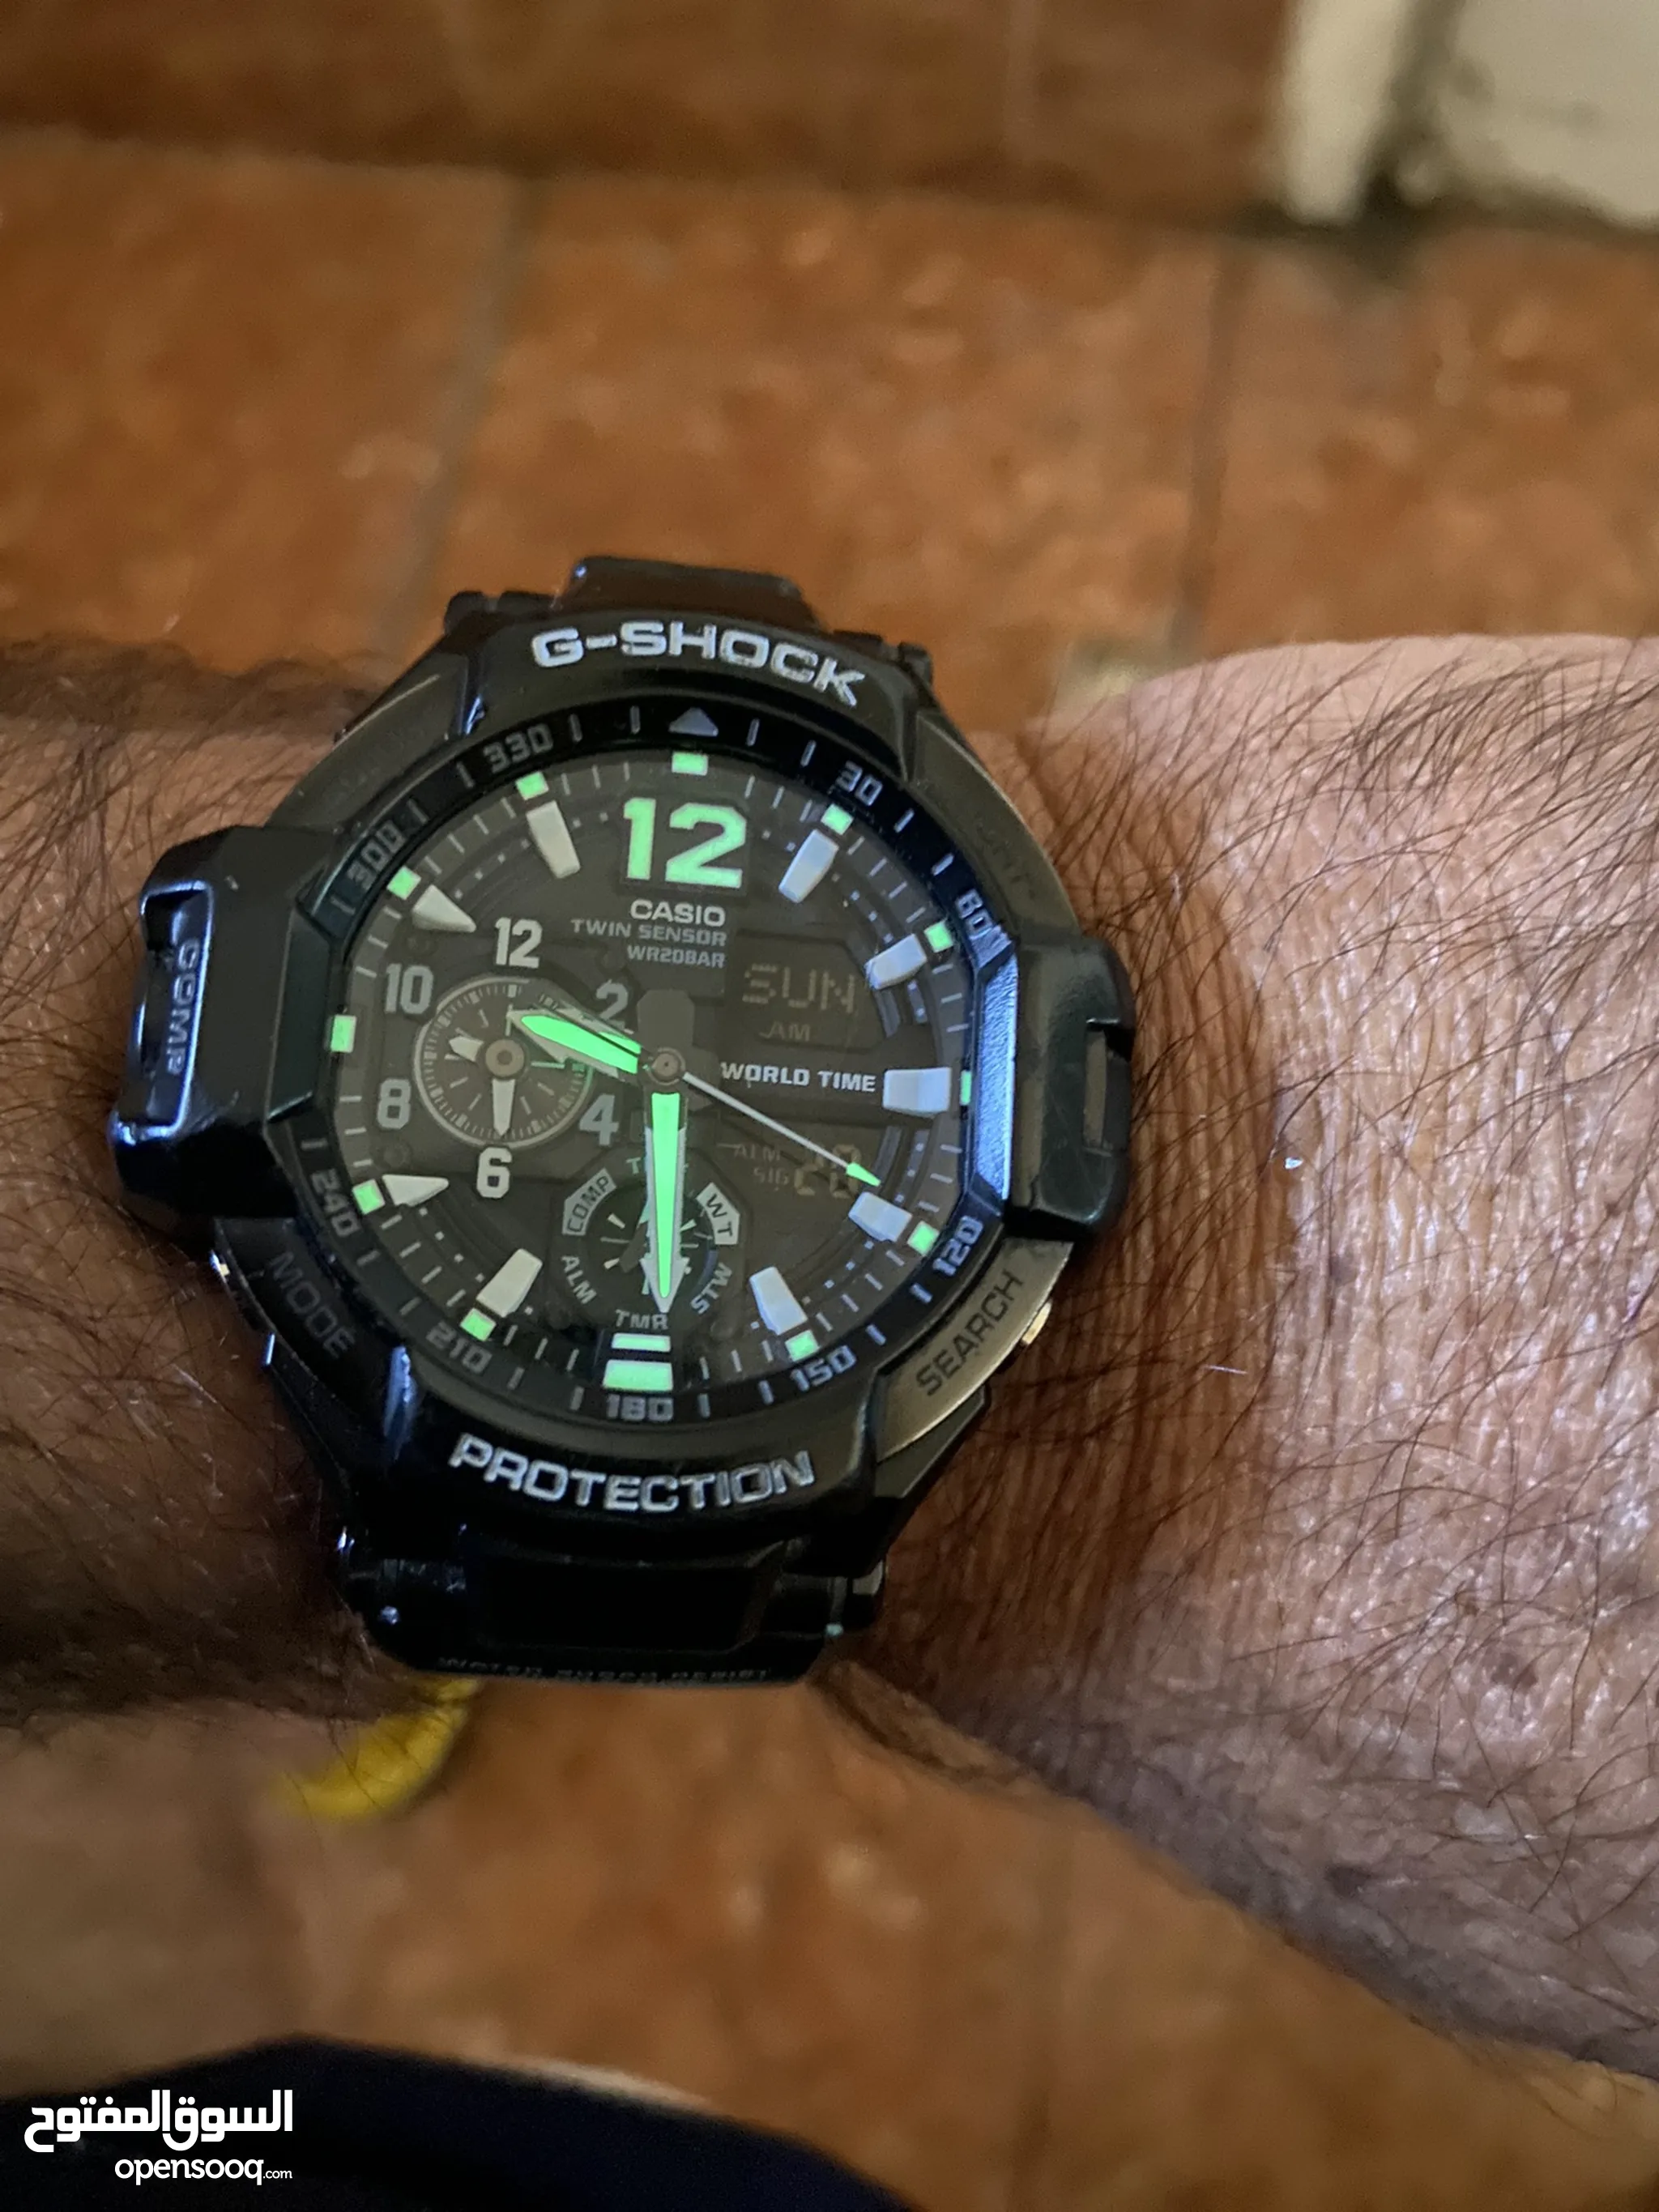 G-Shock Men's Watches for Sale in Jordan - Smartwatch, Digital Watches :  Best Prices | OpenSooq